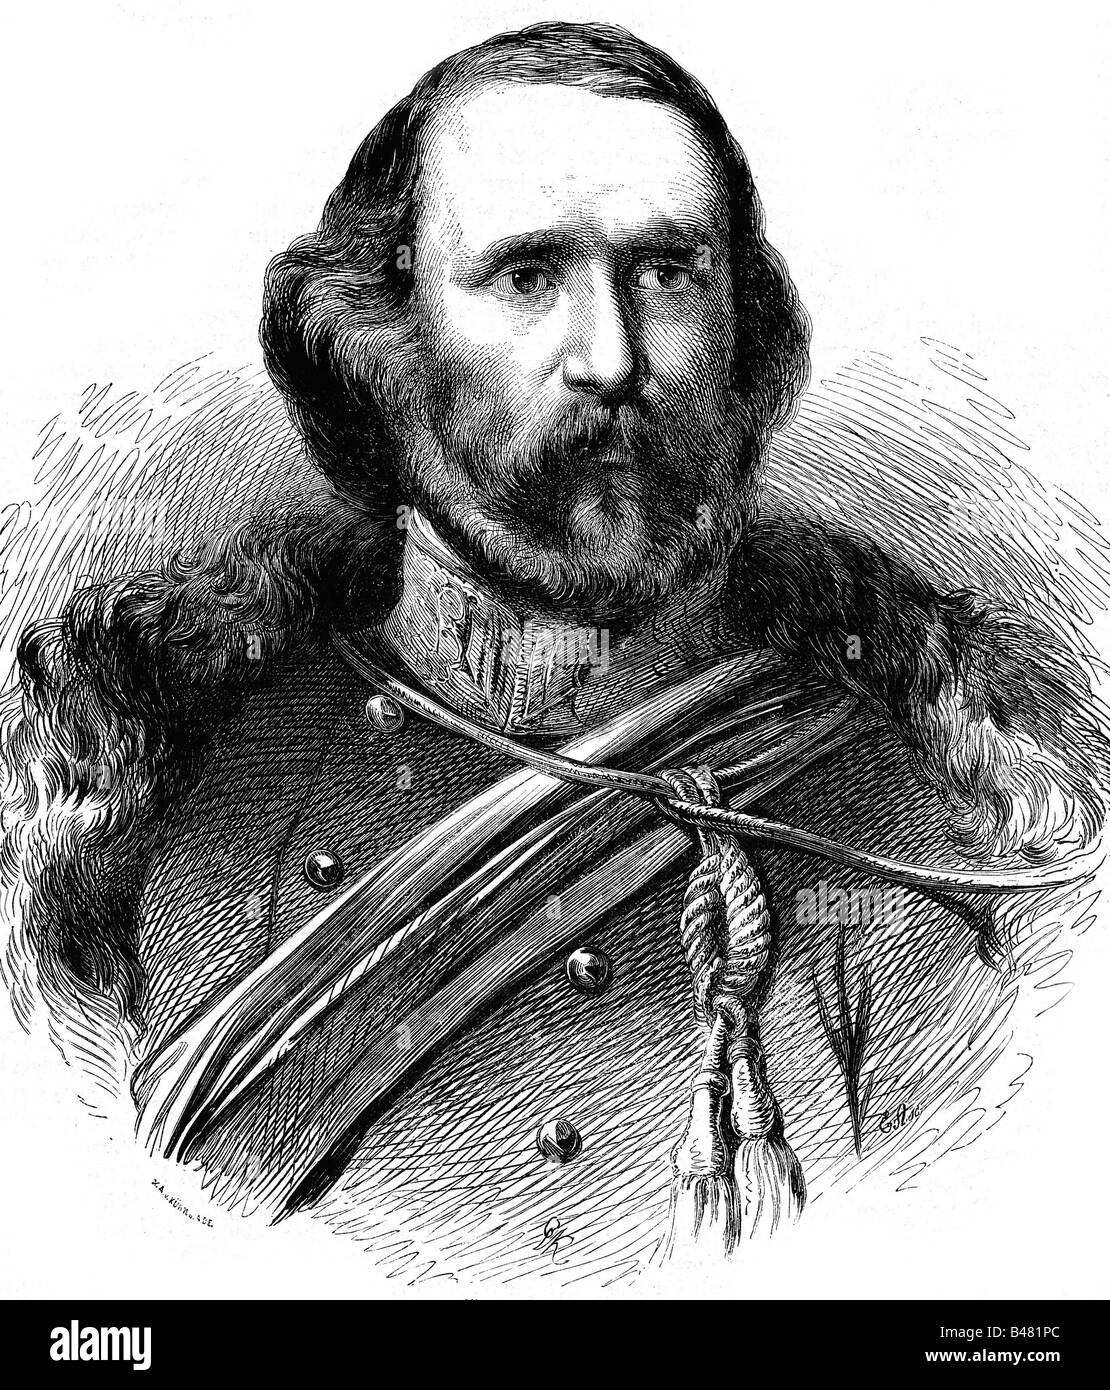 Garibaldi, Giuseppe, 4.7.1807 - 2.6.1882, Italian revolutionary, portrait, engraving, 1868, freedom fighter, patriot, Risorgimento, politics, uniform, , Stock Photo